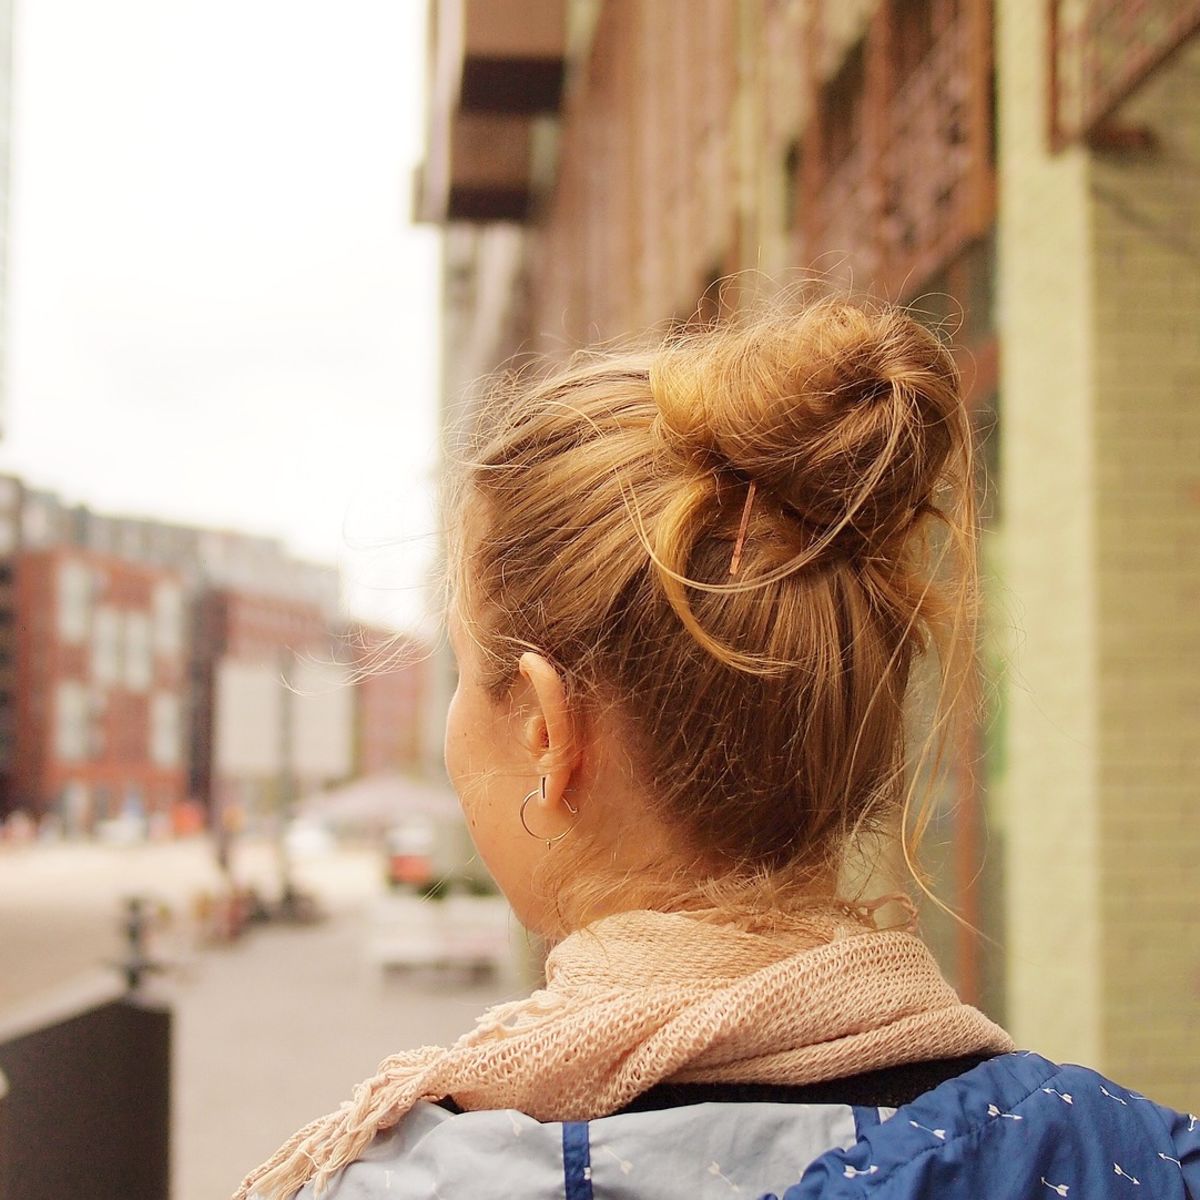 Woman with hair in a bun walking along a city street